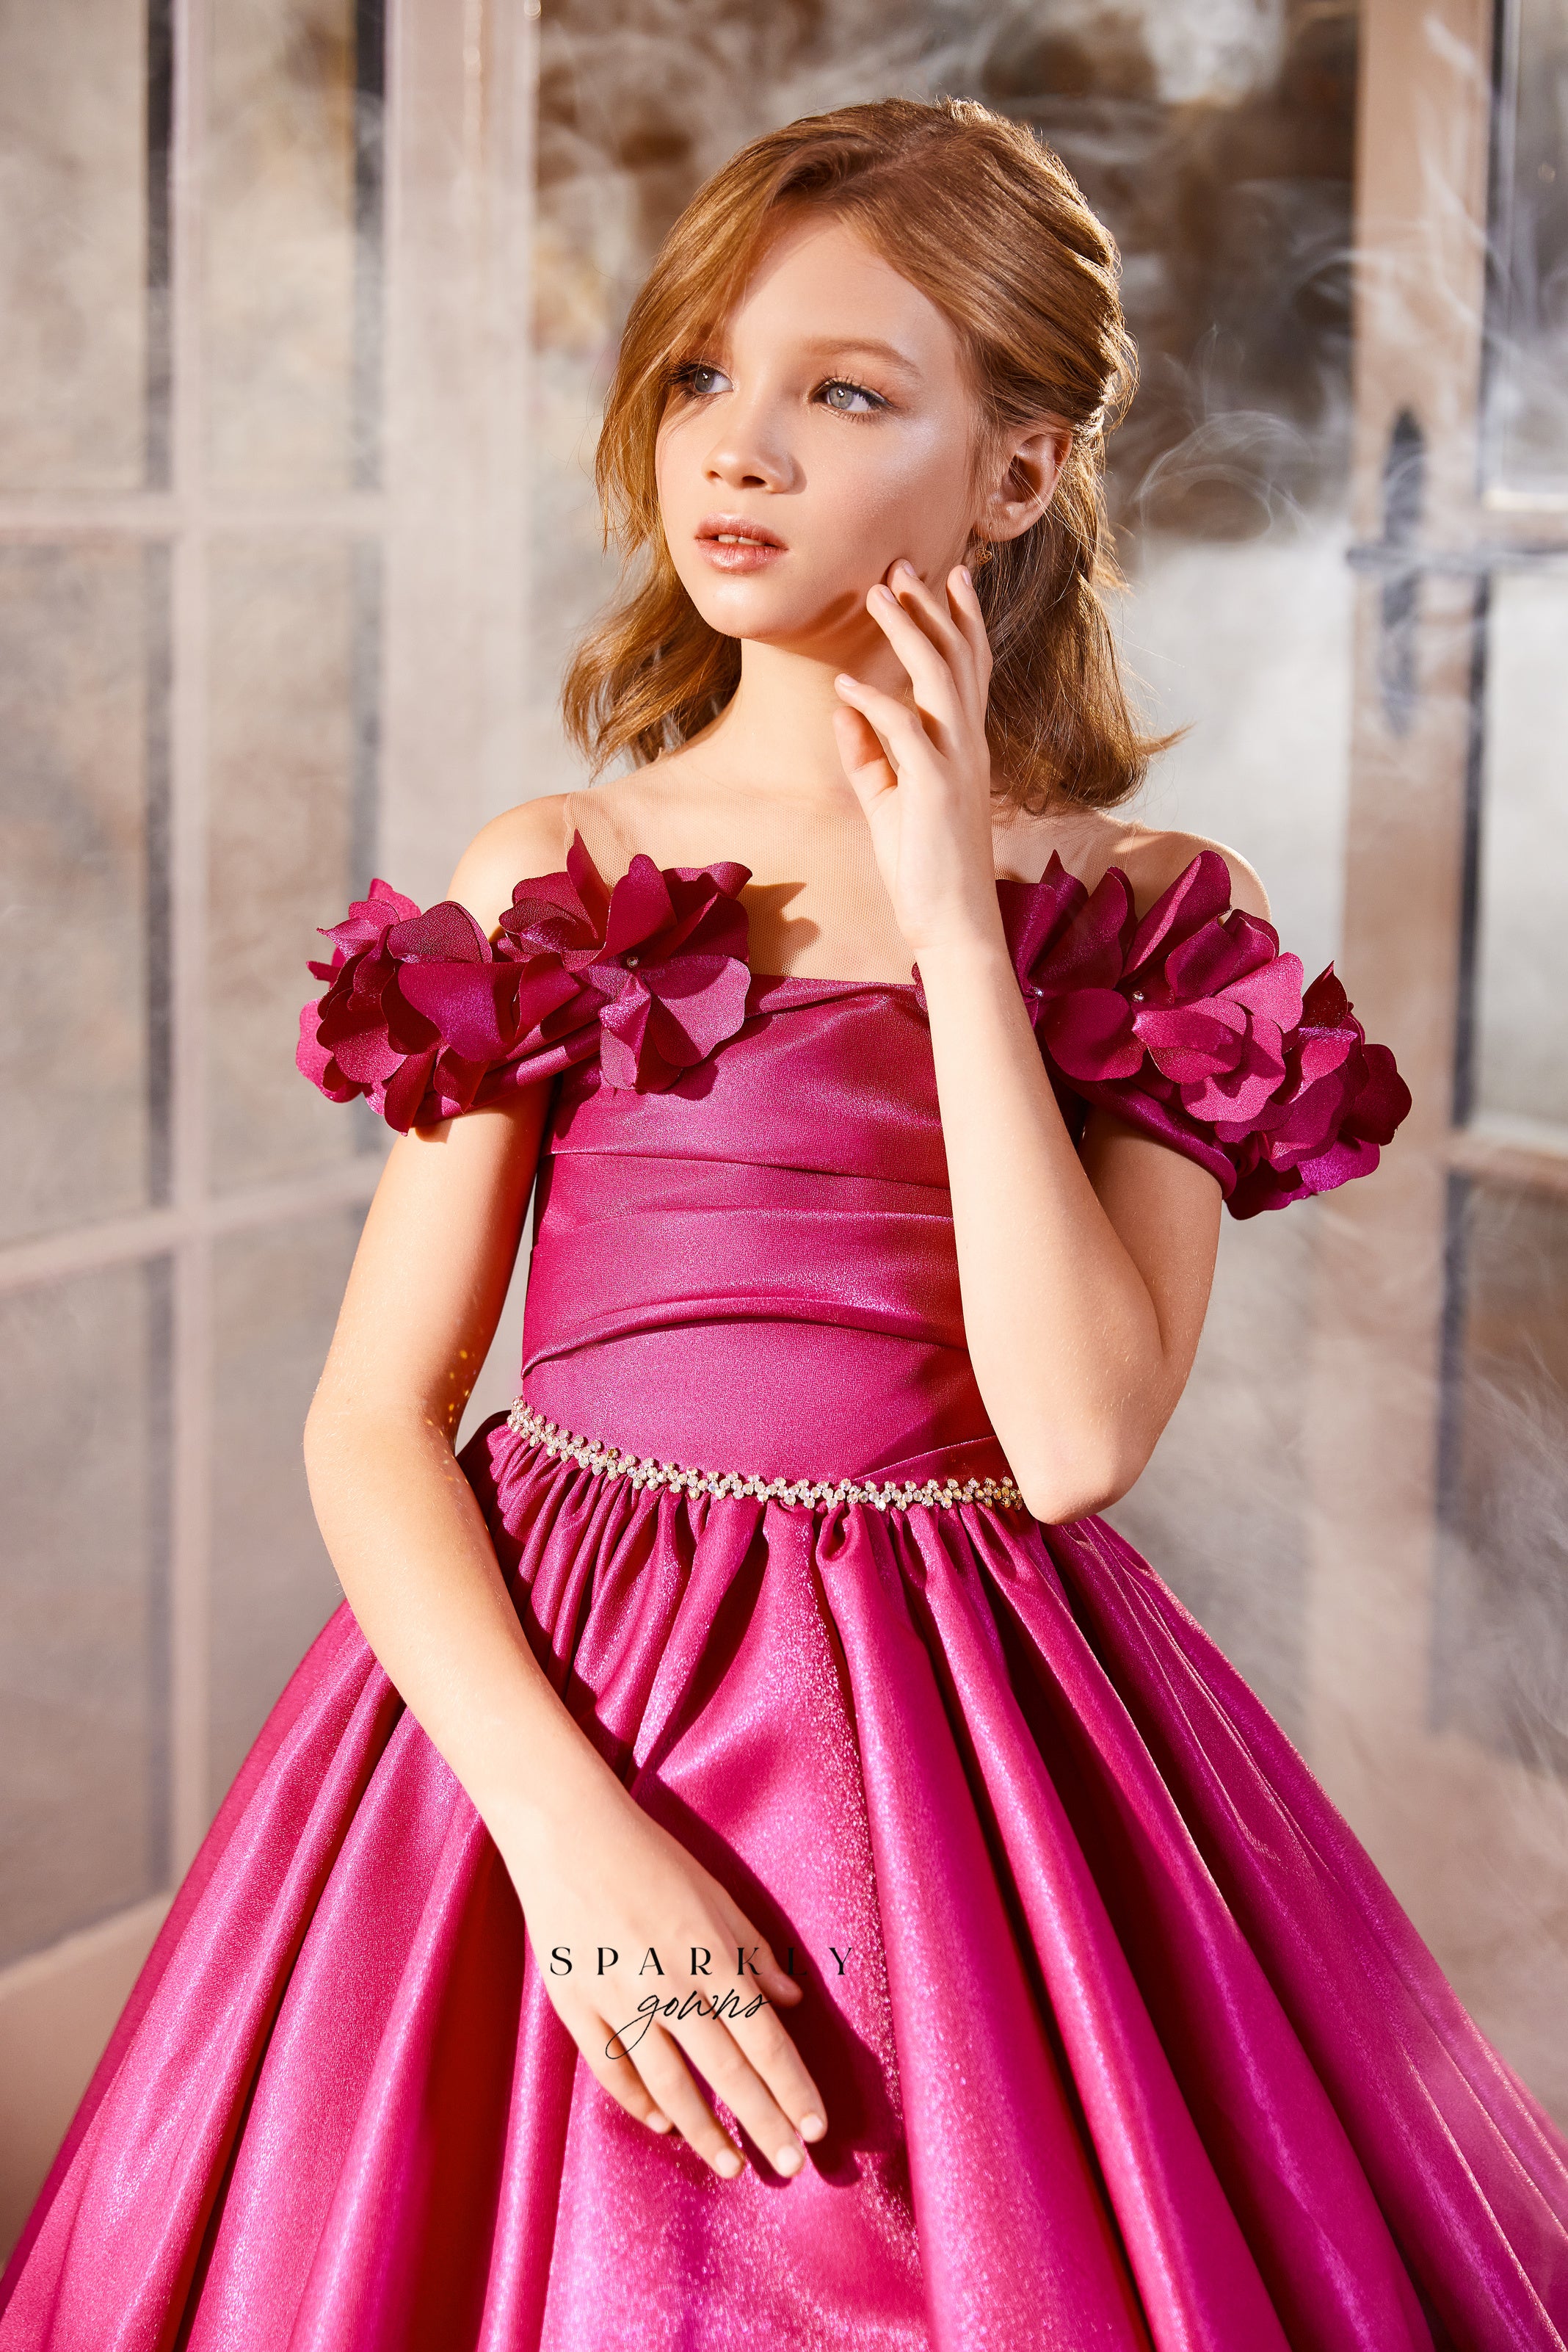 Pinterest | Kids gown, Girl dress patterns, Baby gowns girl